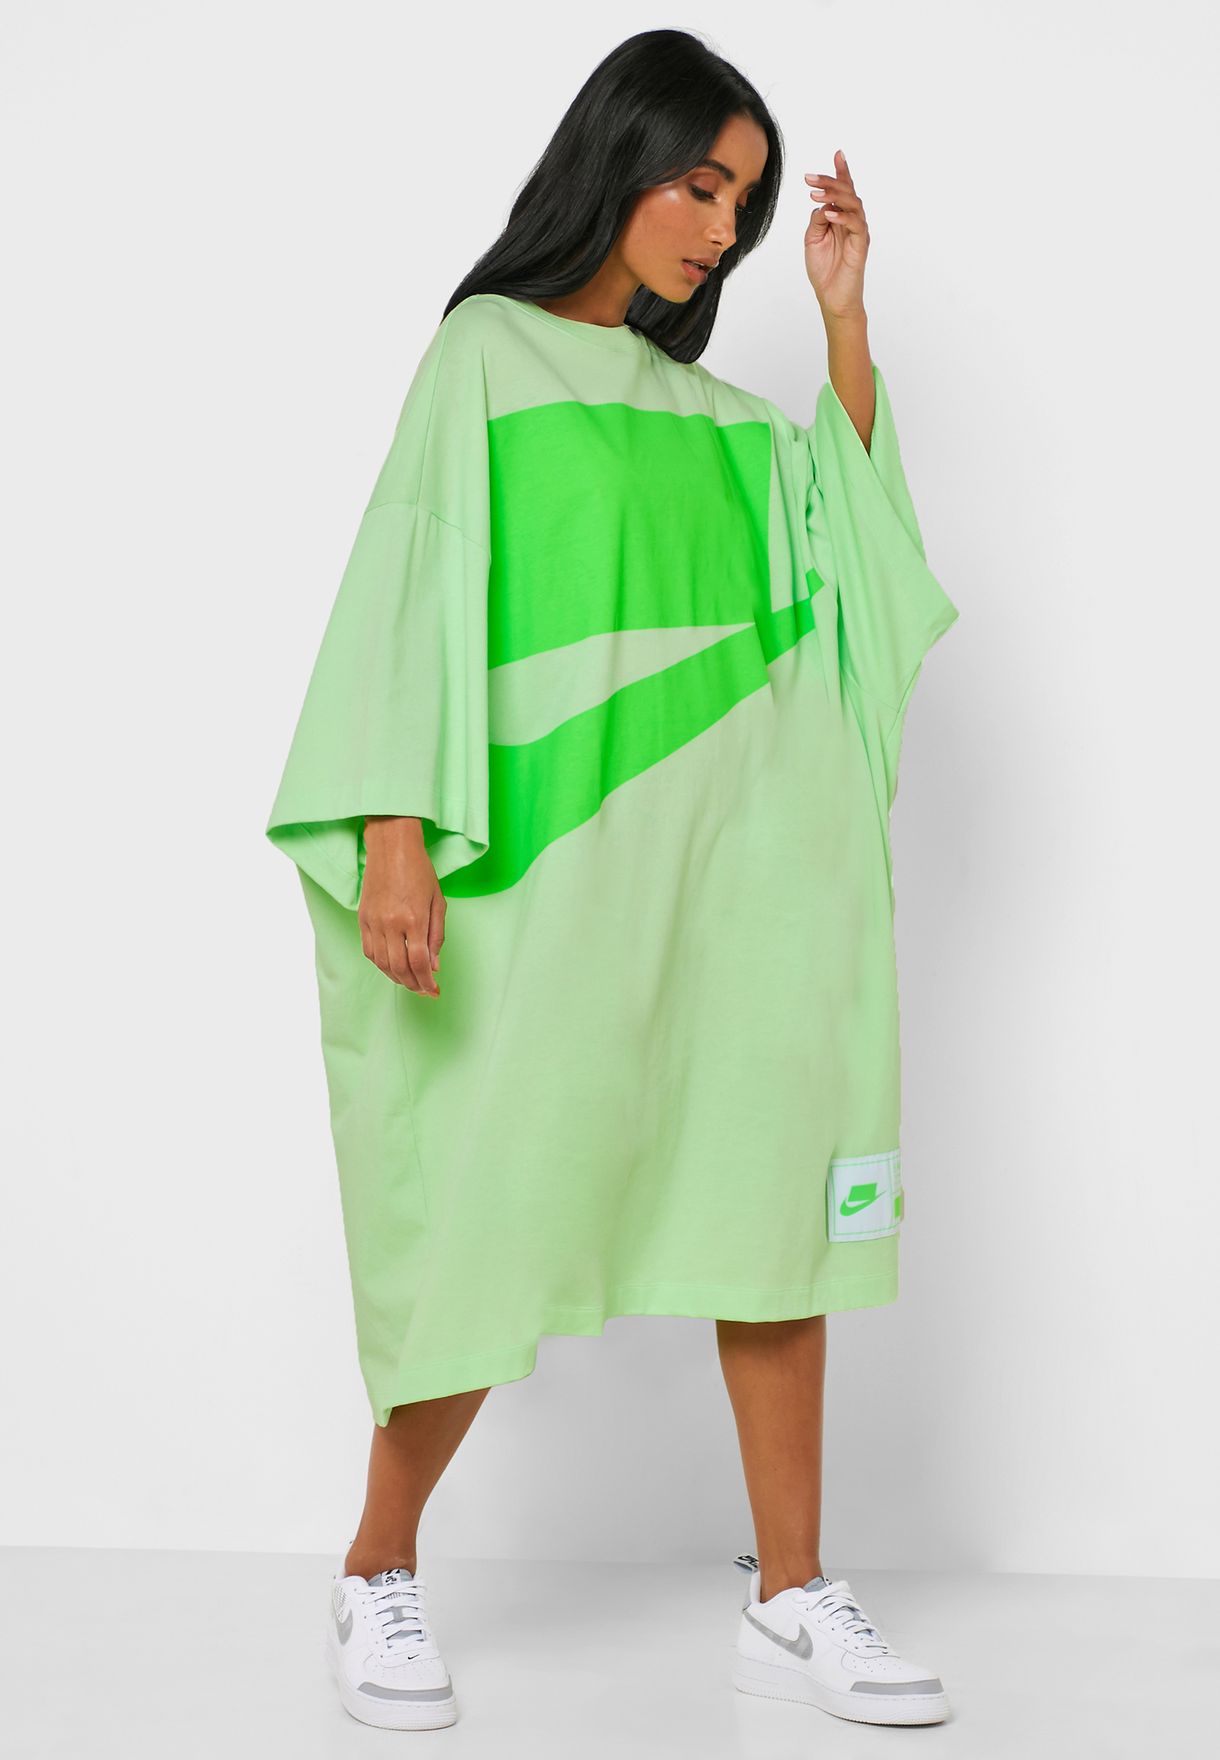 green nike dress